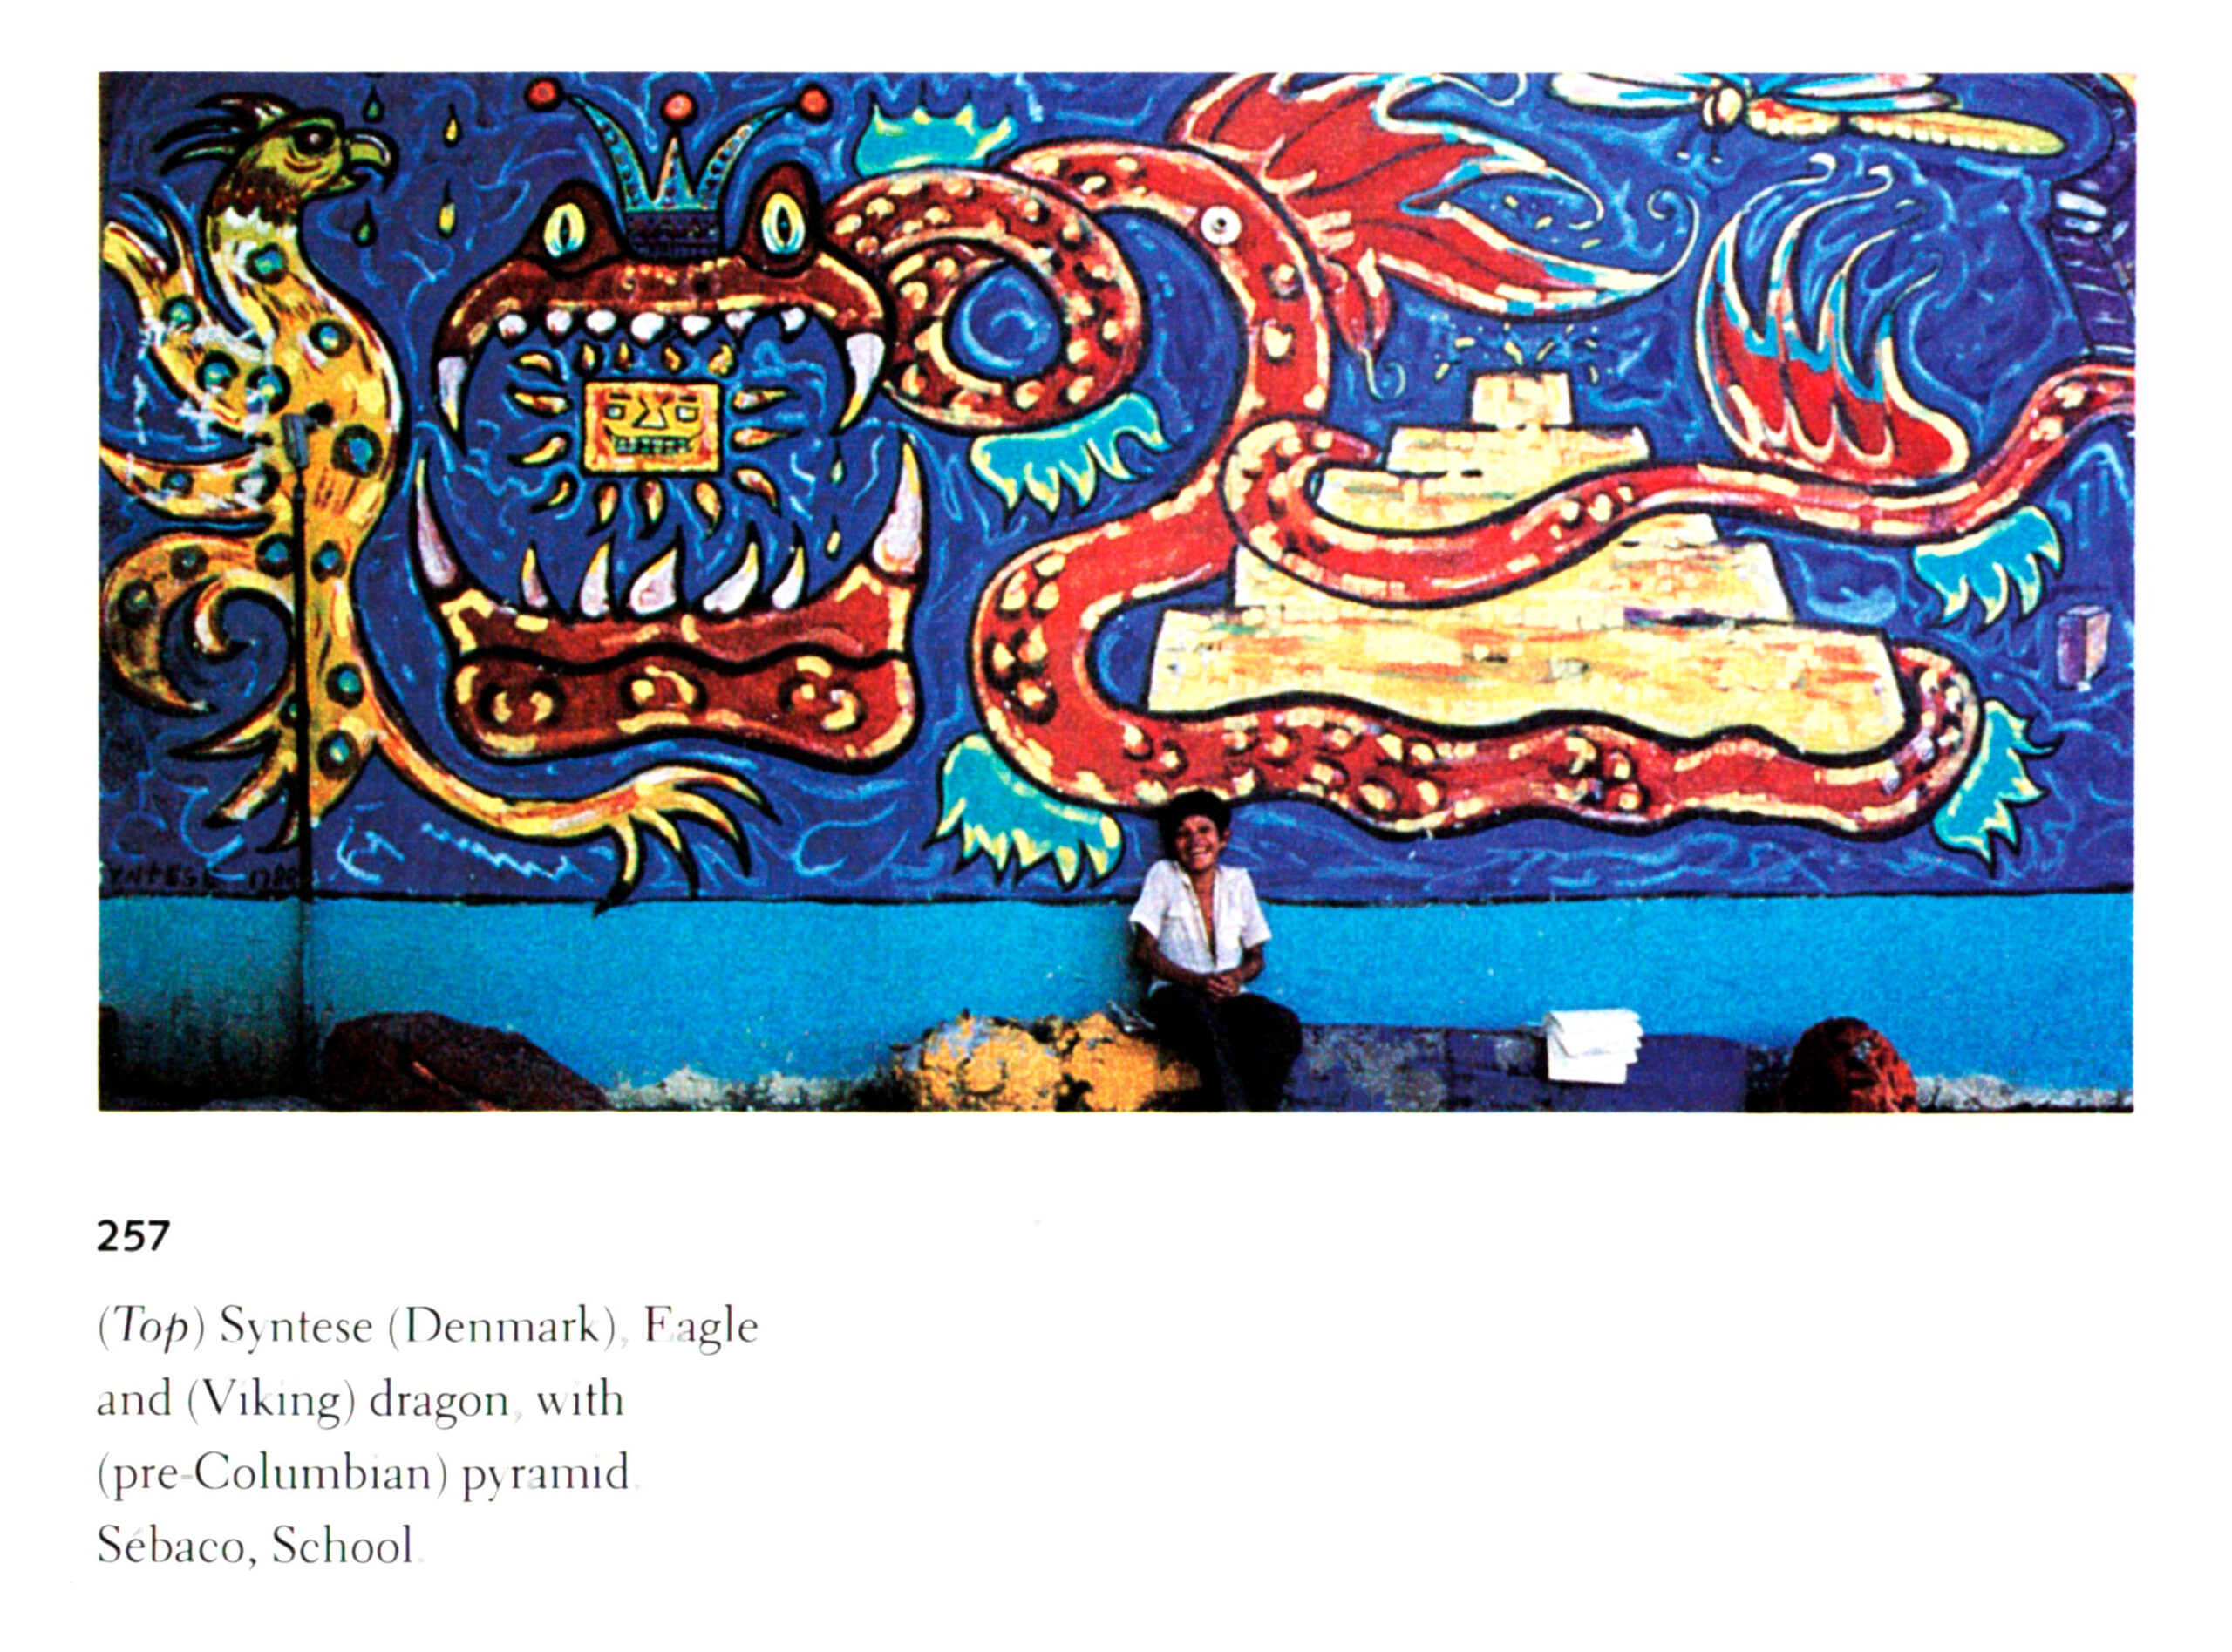 Eagel and dragon with pyramid. Murmaleri (Skole, Sébaco, Matagalpa bjergene, Nicaragua) Fra bogen The Murals of Revolutionary Nicaragua. David Kunzle. University of California. Dateret 1995.